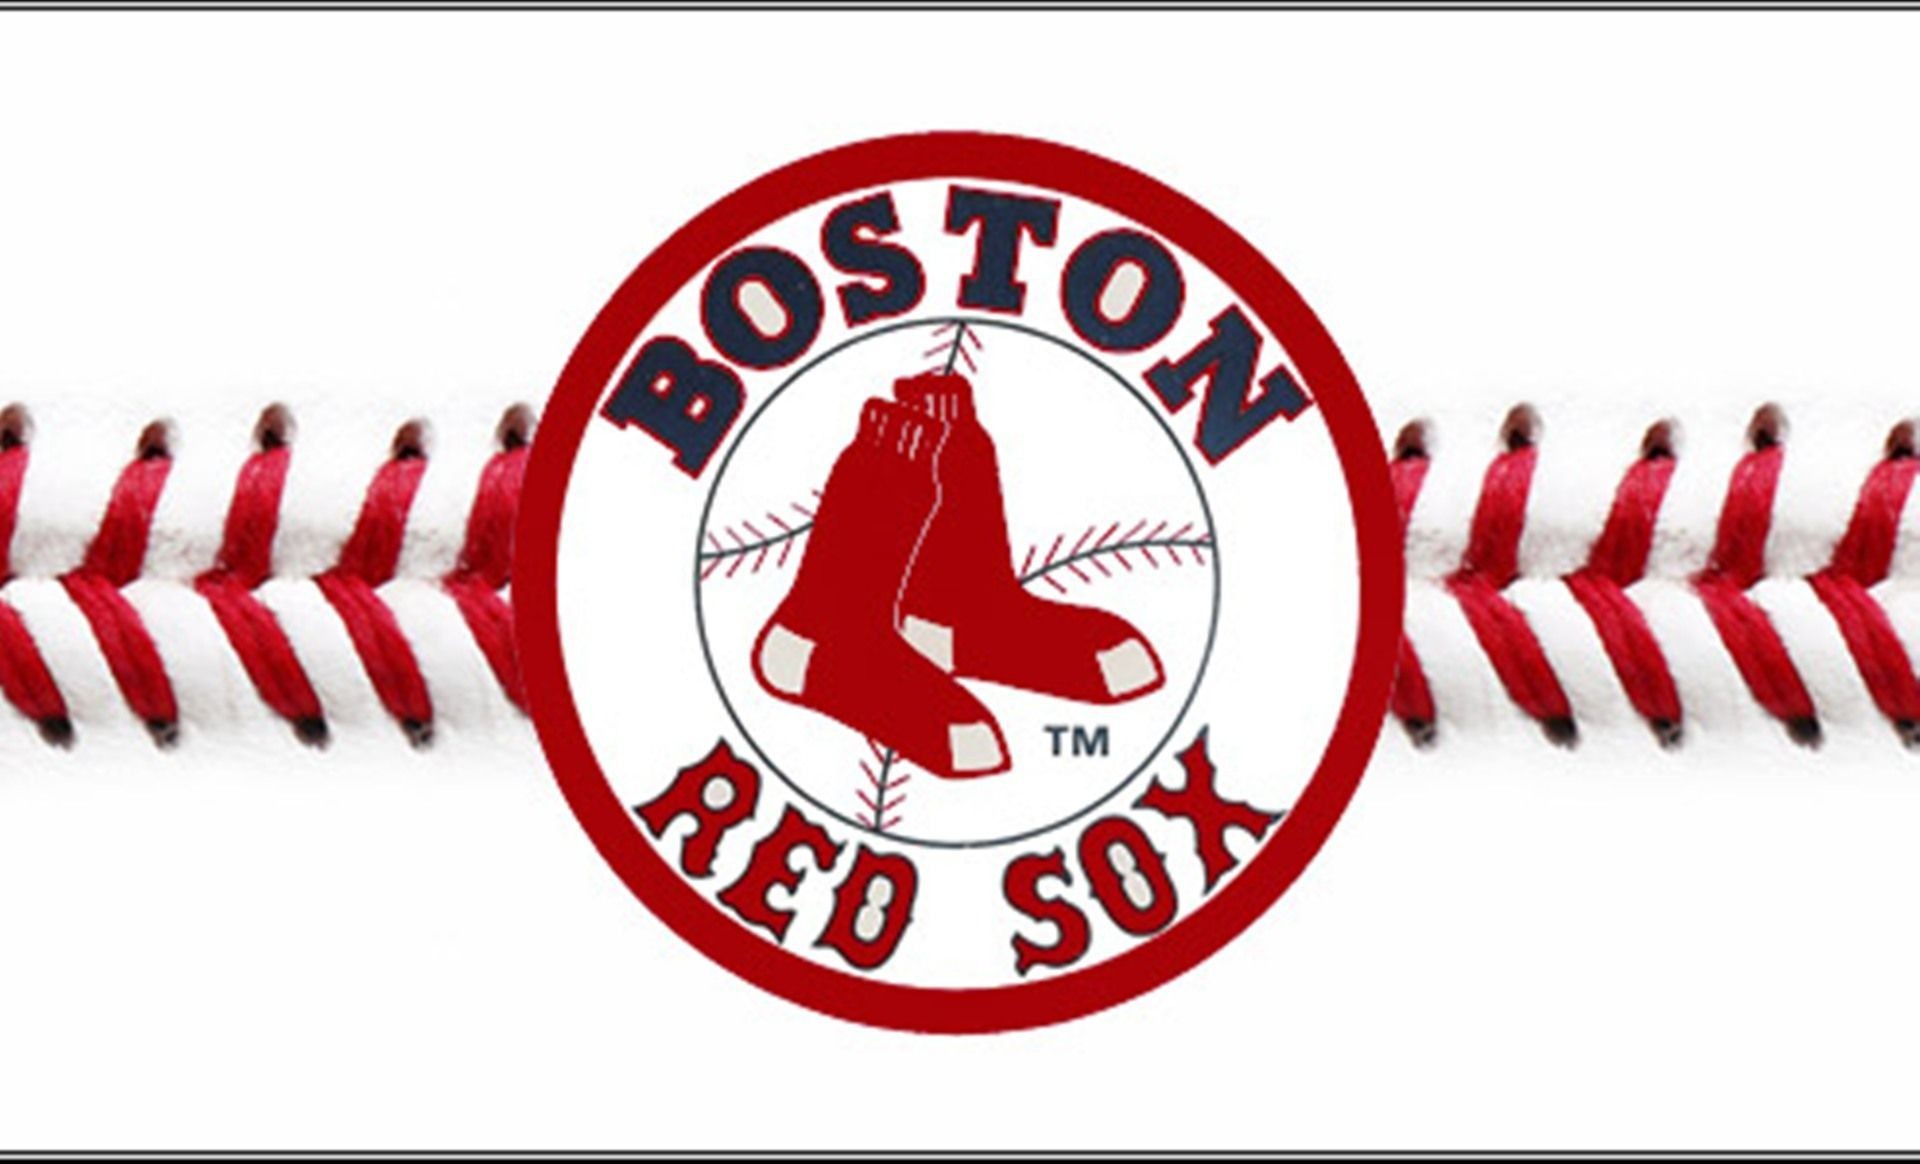 boston-red-sox-logo-wallpaper-hd-widescreen – Melee Stats